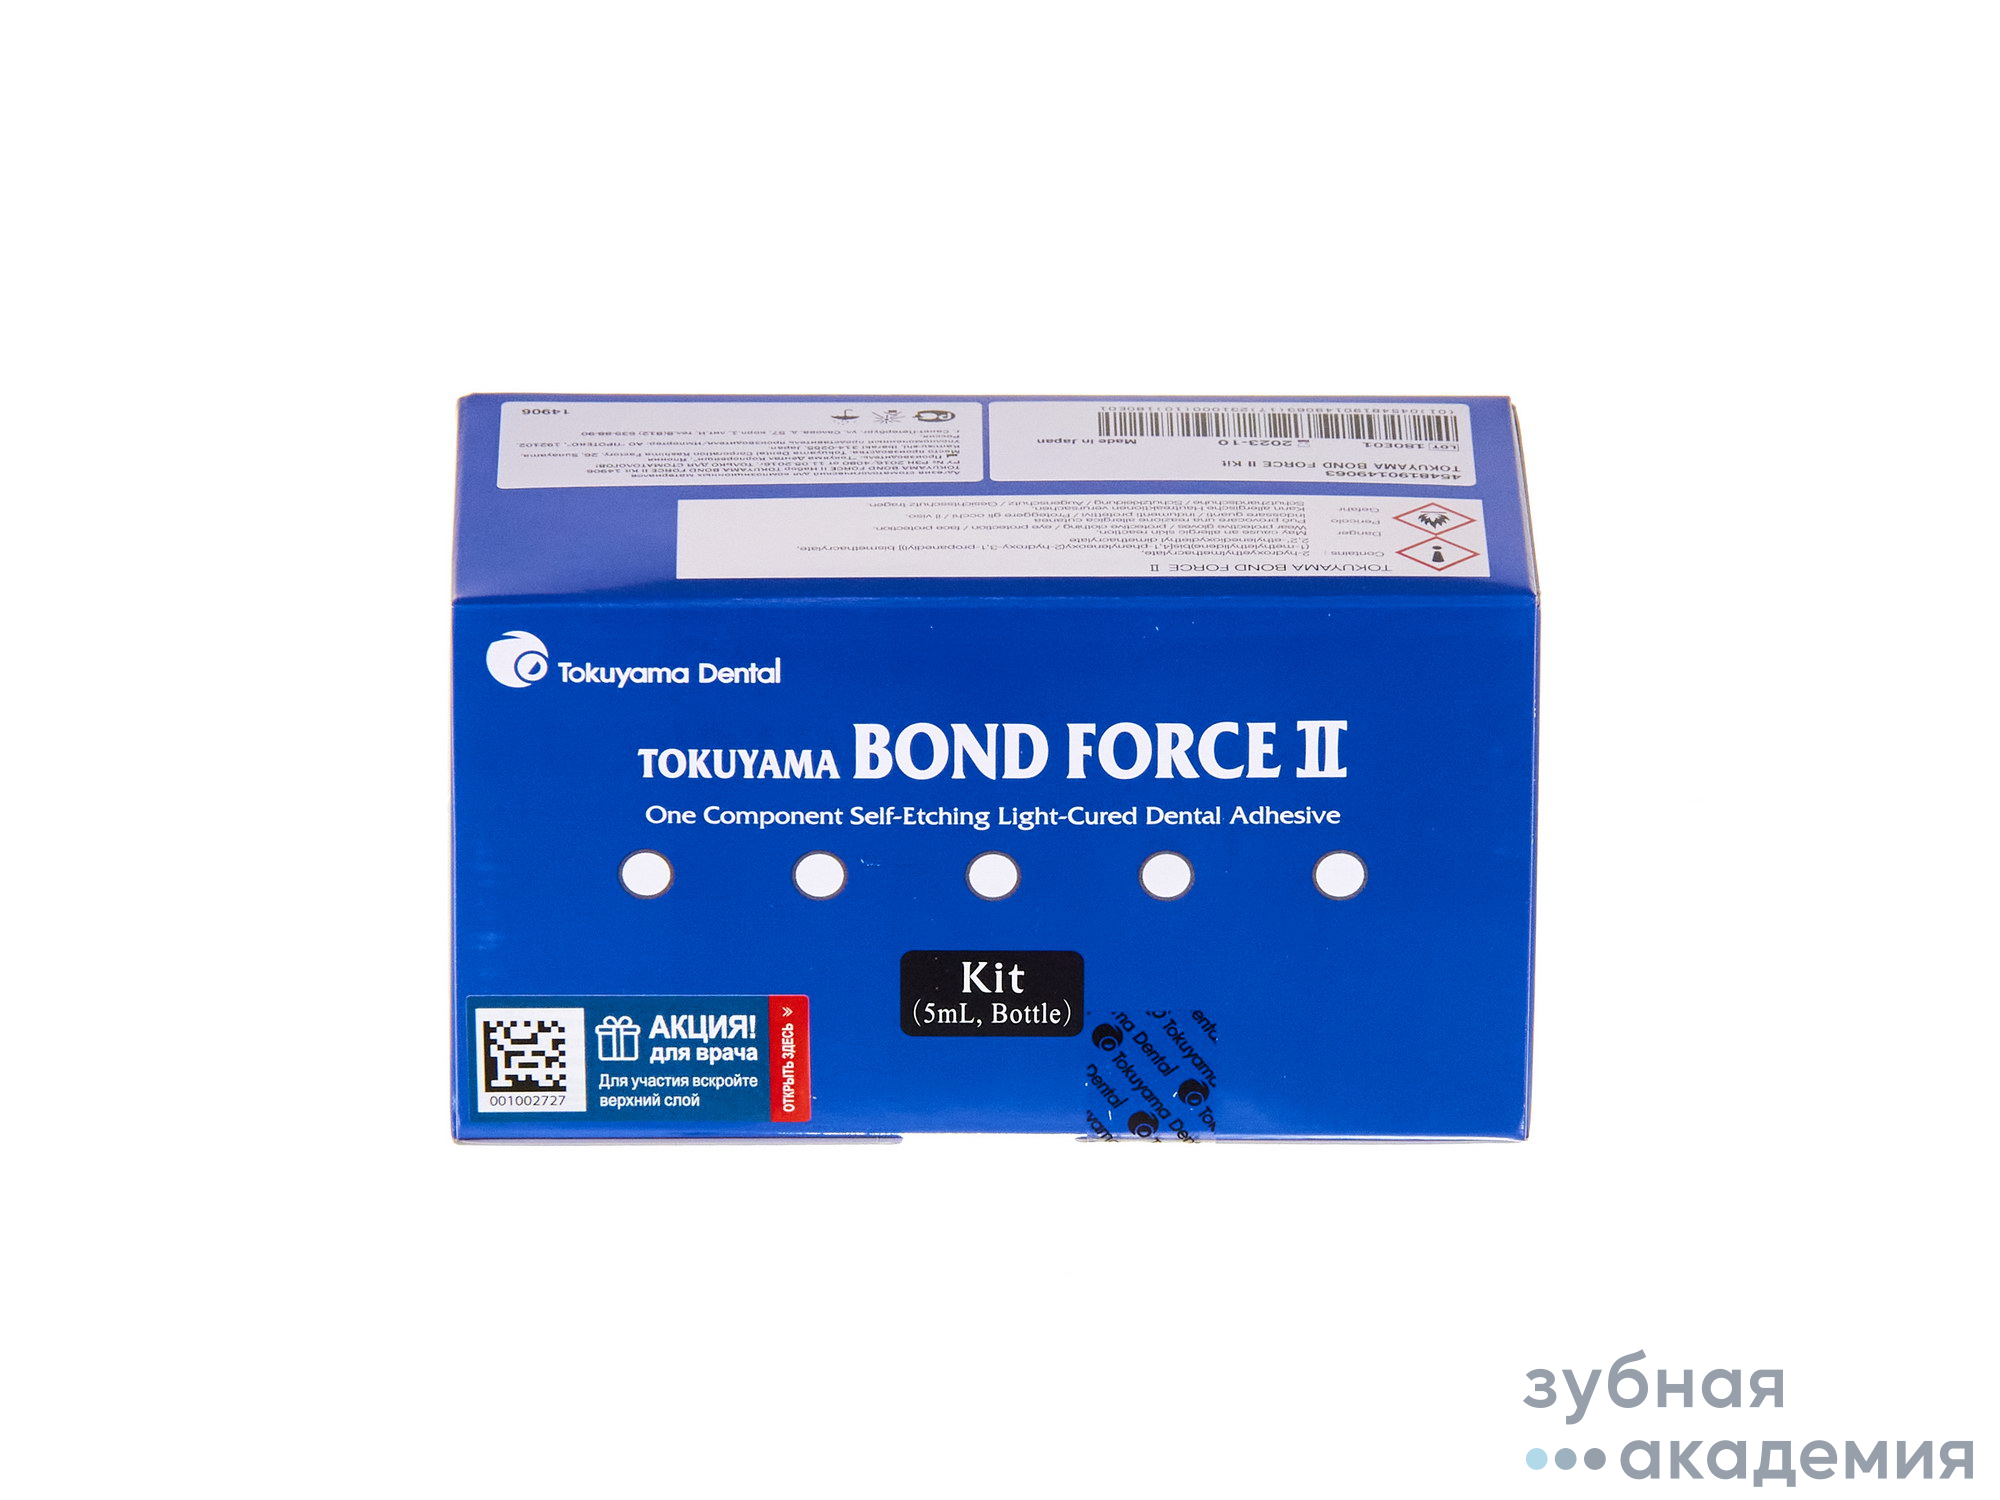 Адгезив BOND Force II Kit / Бонд Форс набор 5мл+ аппликаторы /Tokuyama Dental/ Япония